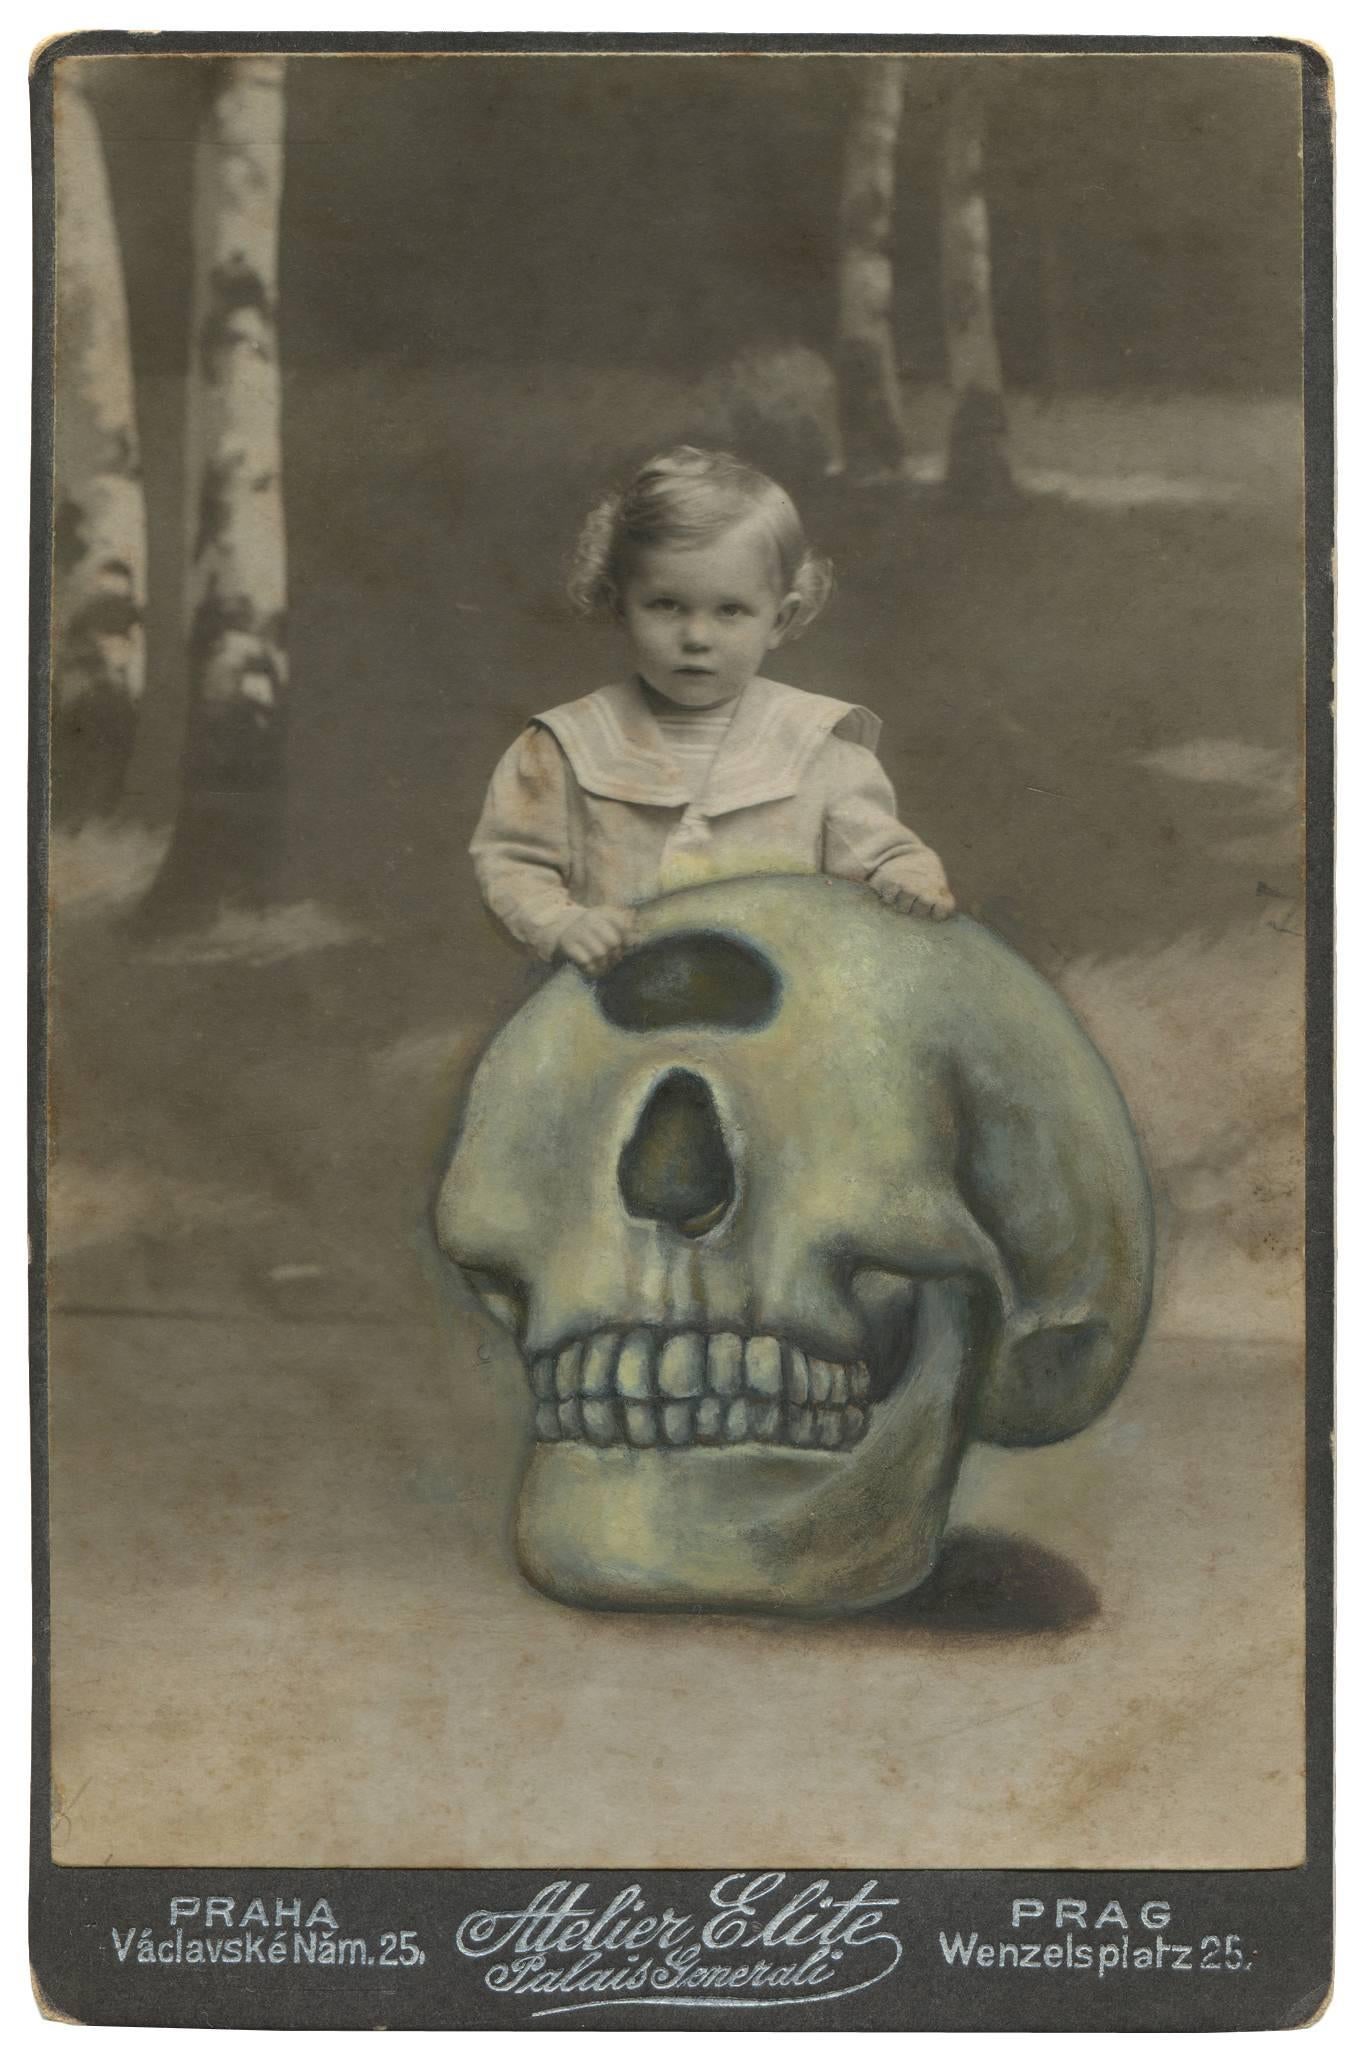 Jana Paleckova Abstract Photograph - Untitled (The One Eyed Skull)